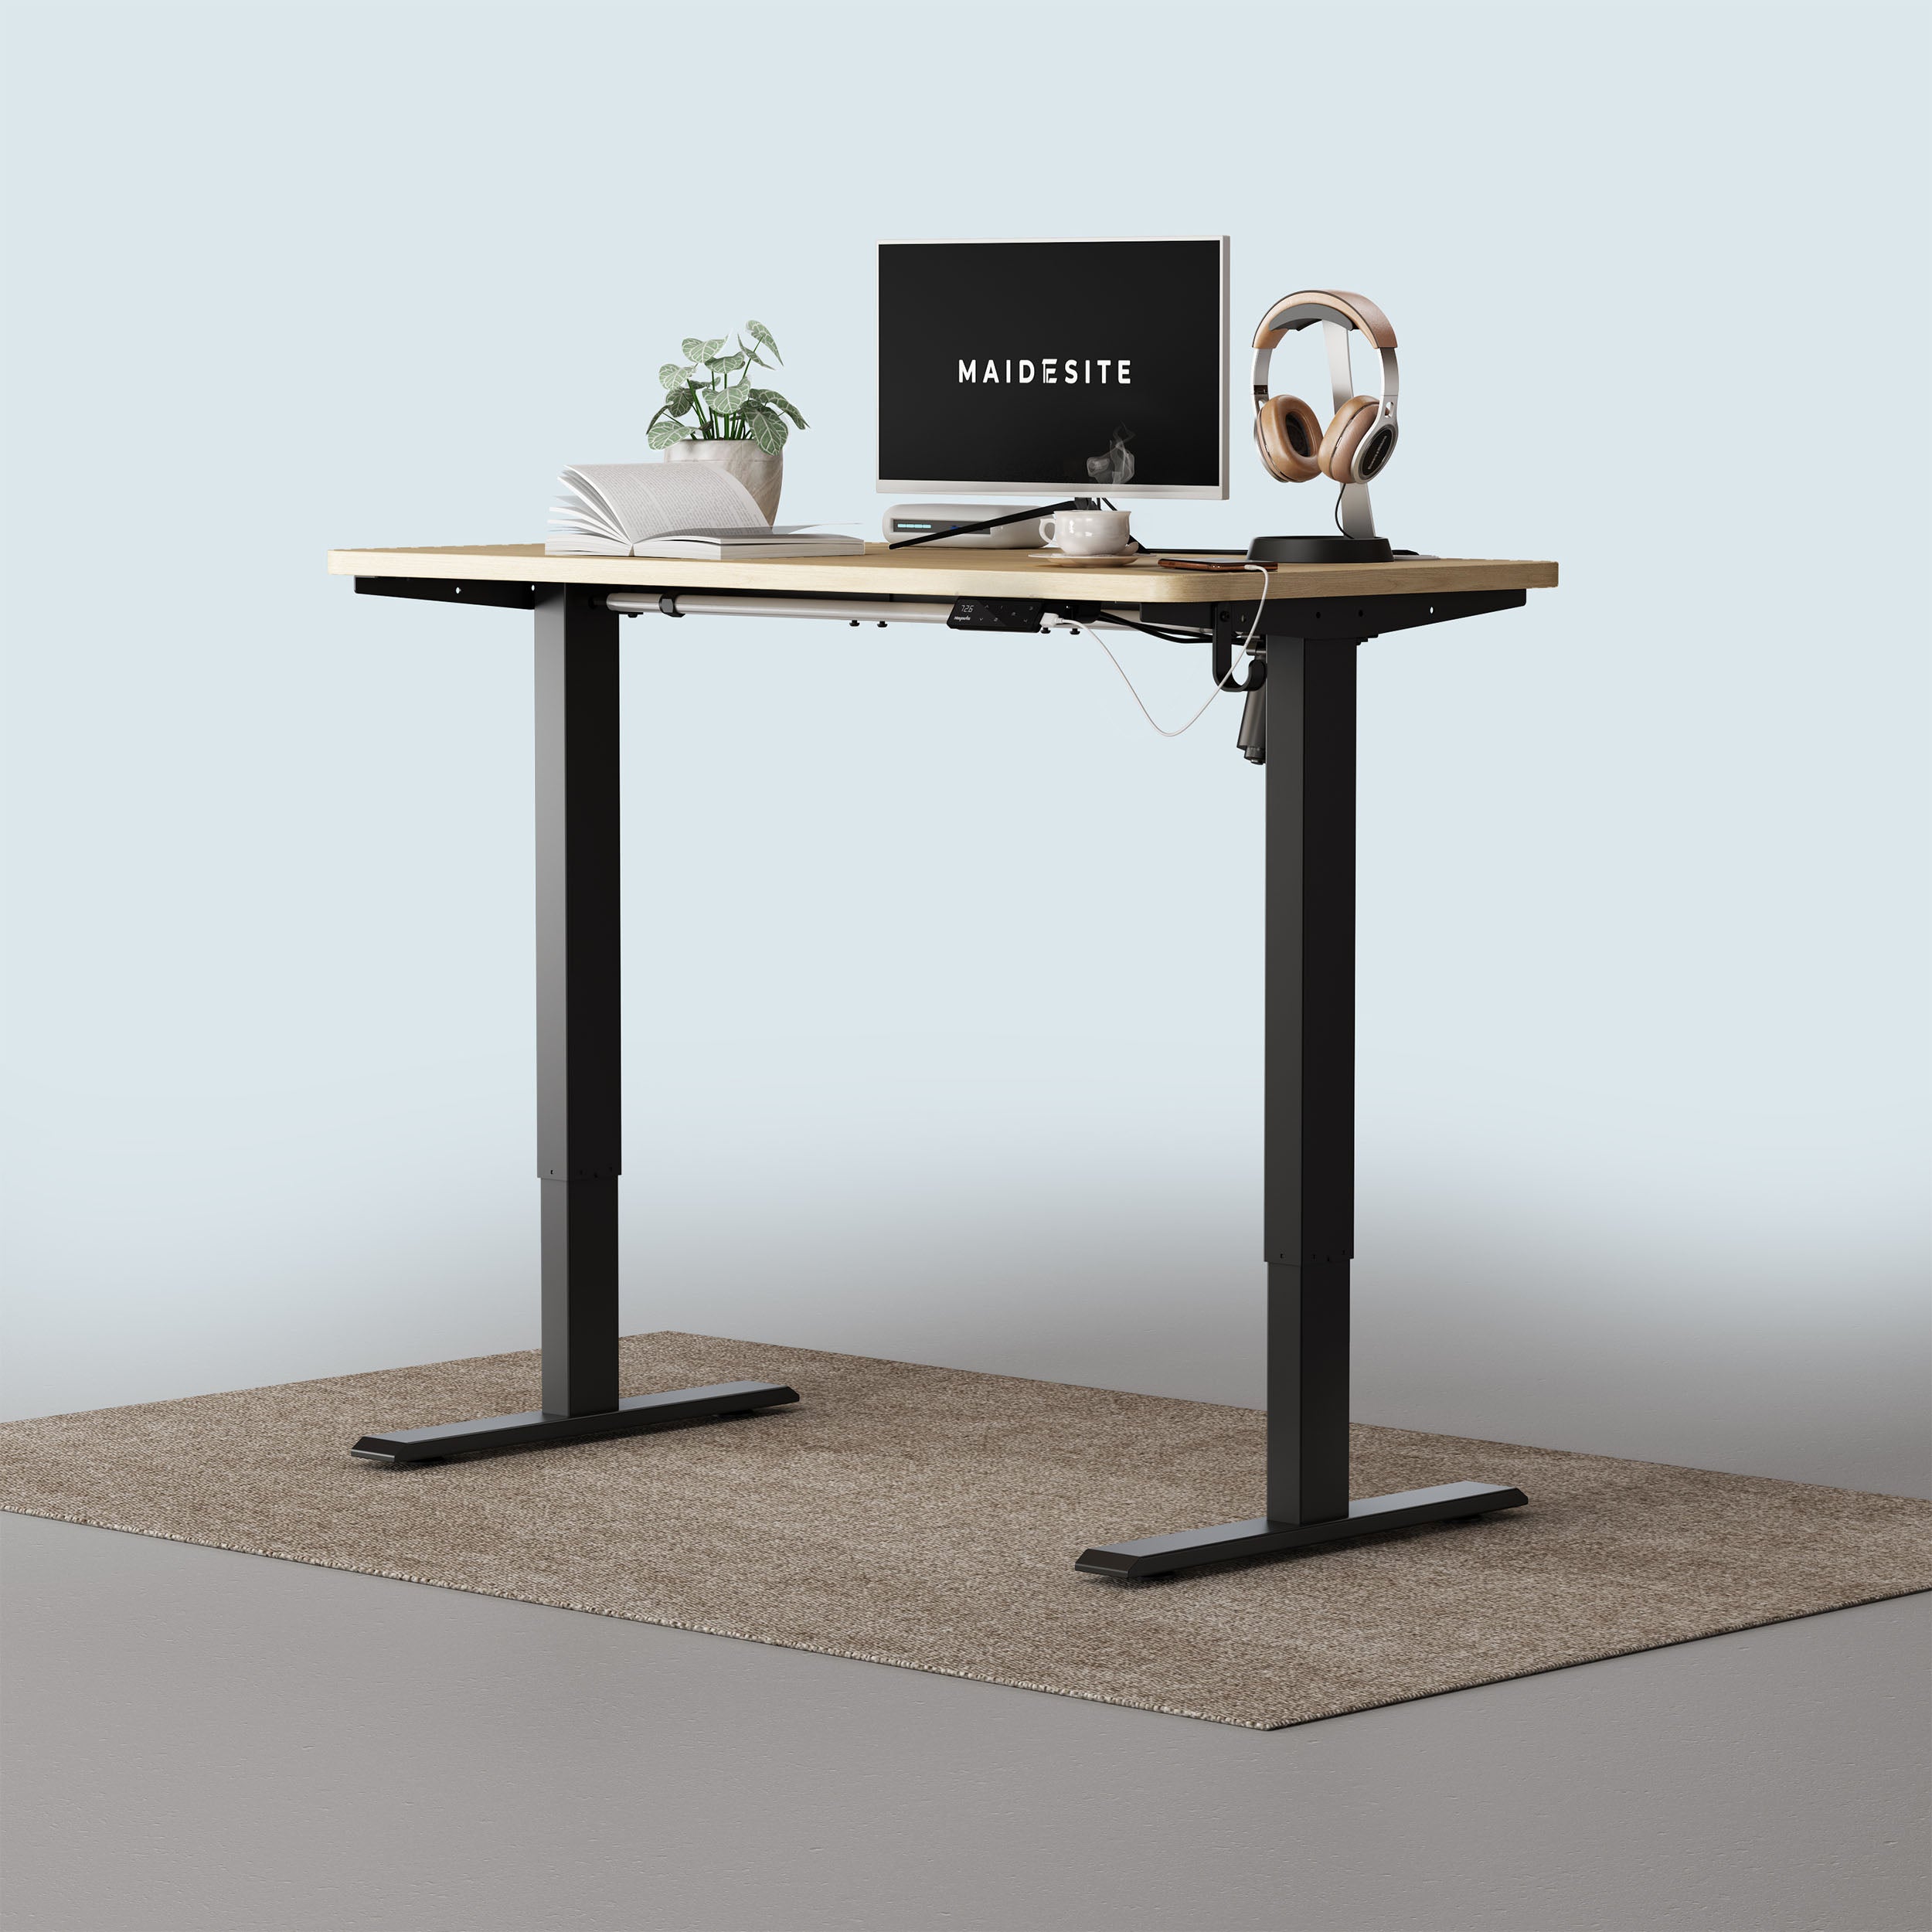 Maidesite T1 Baisc black electric height adjustable desk